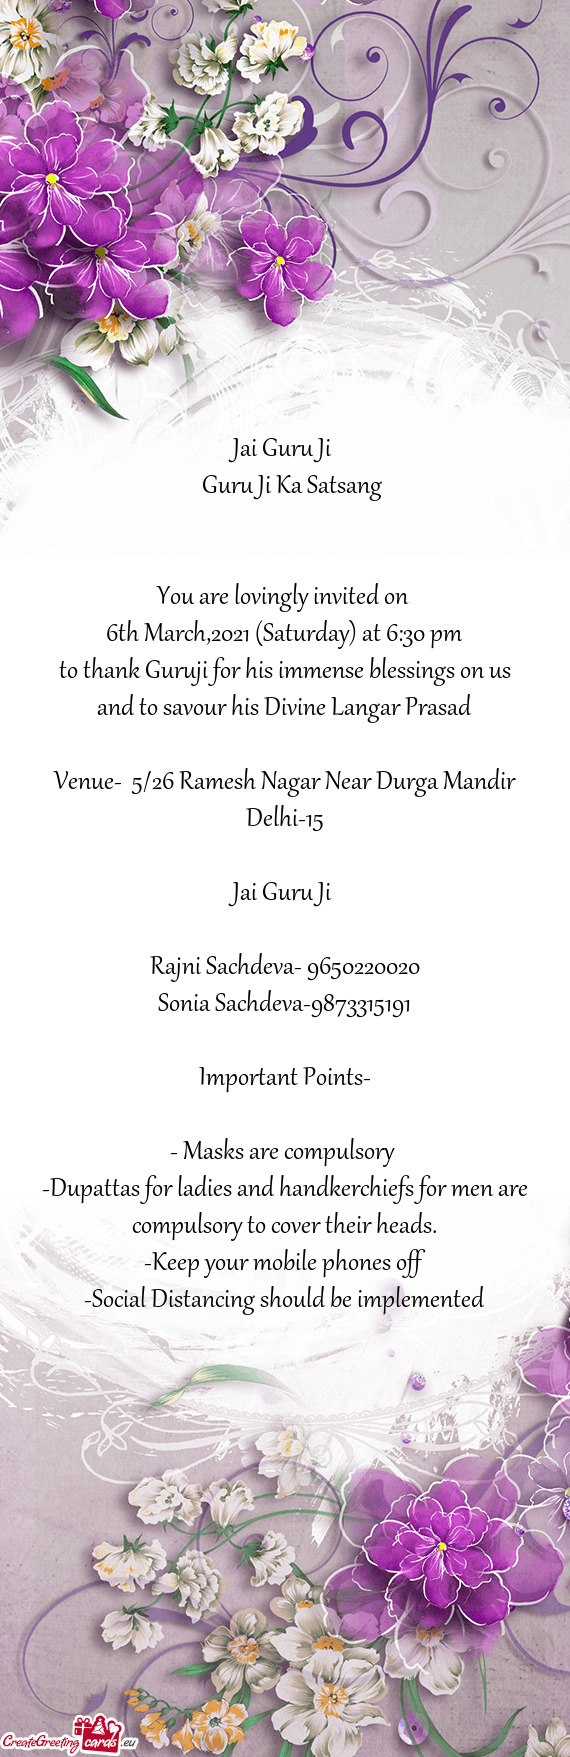 Venue- 5/26 Ramesh Nagar Near Durga Mandir